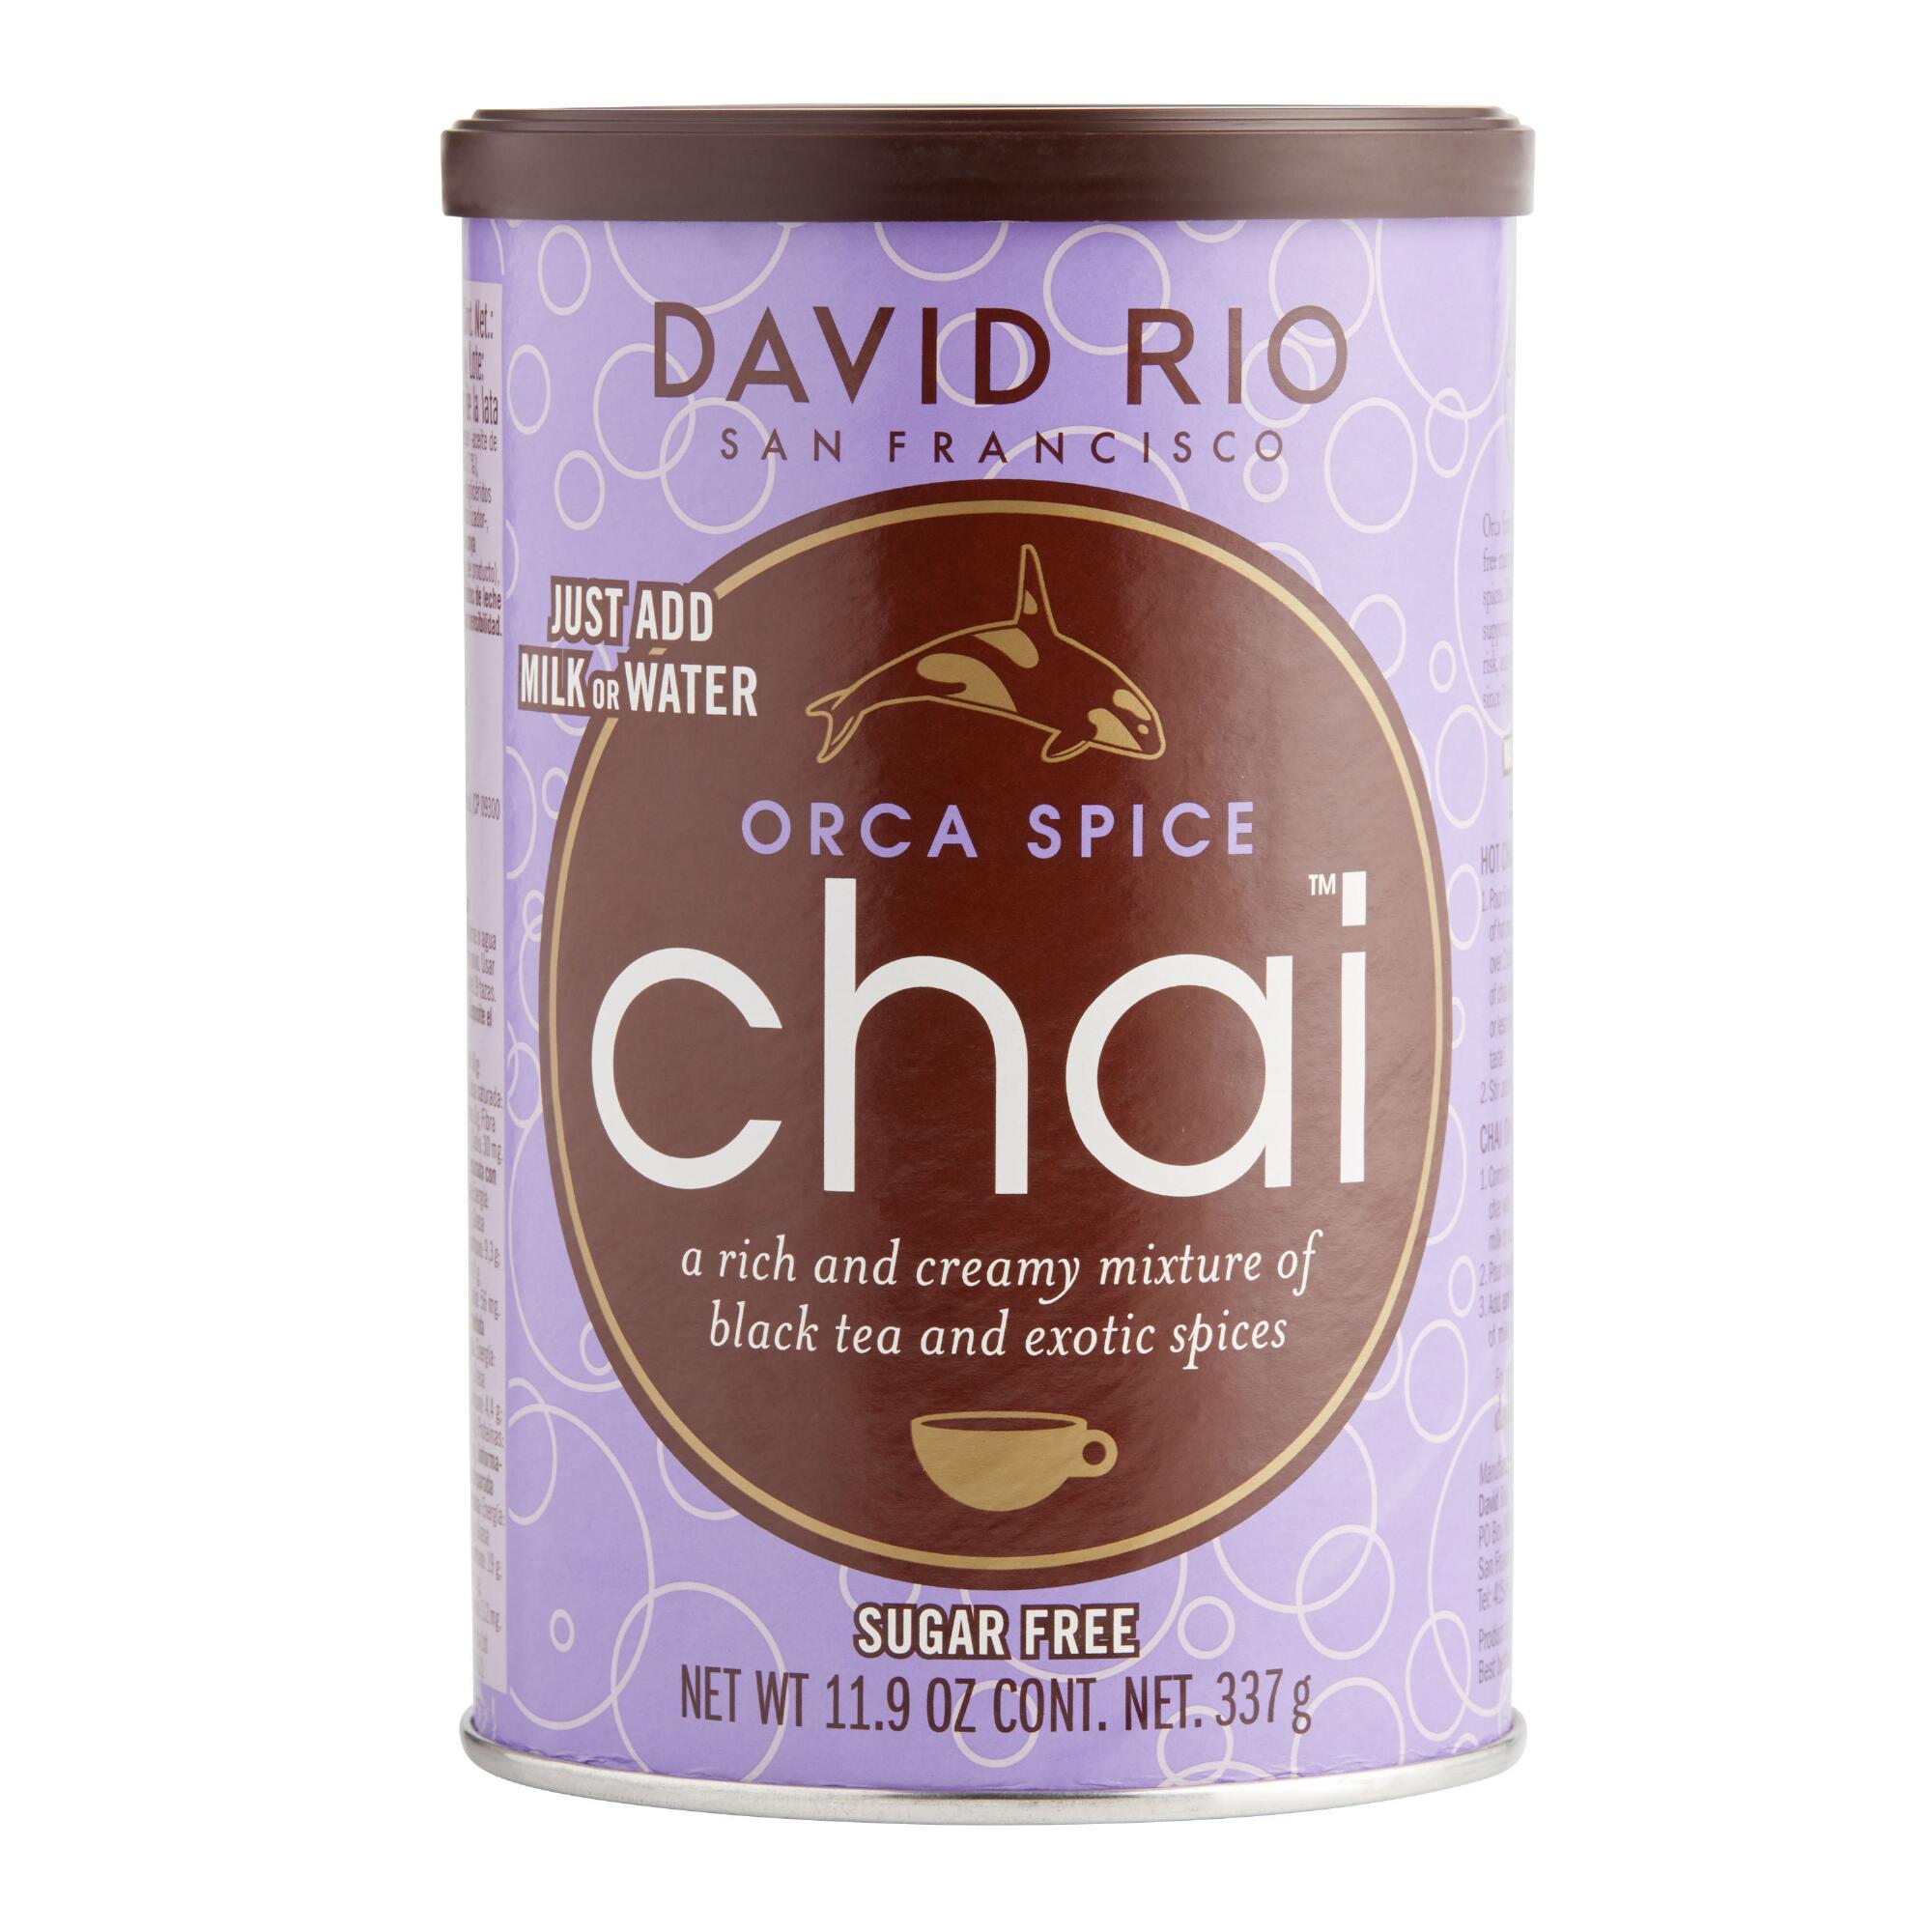 David Rio Orca Spice Sugar Free Chai Mix Set Of 6 by World Market